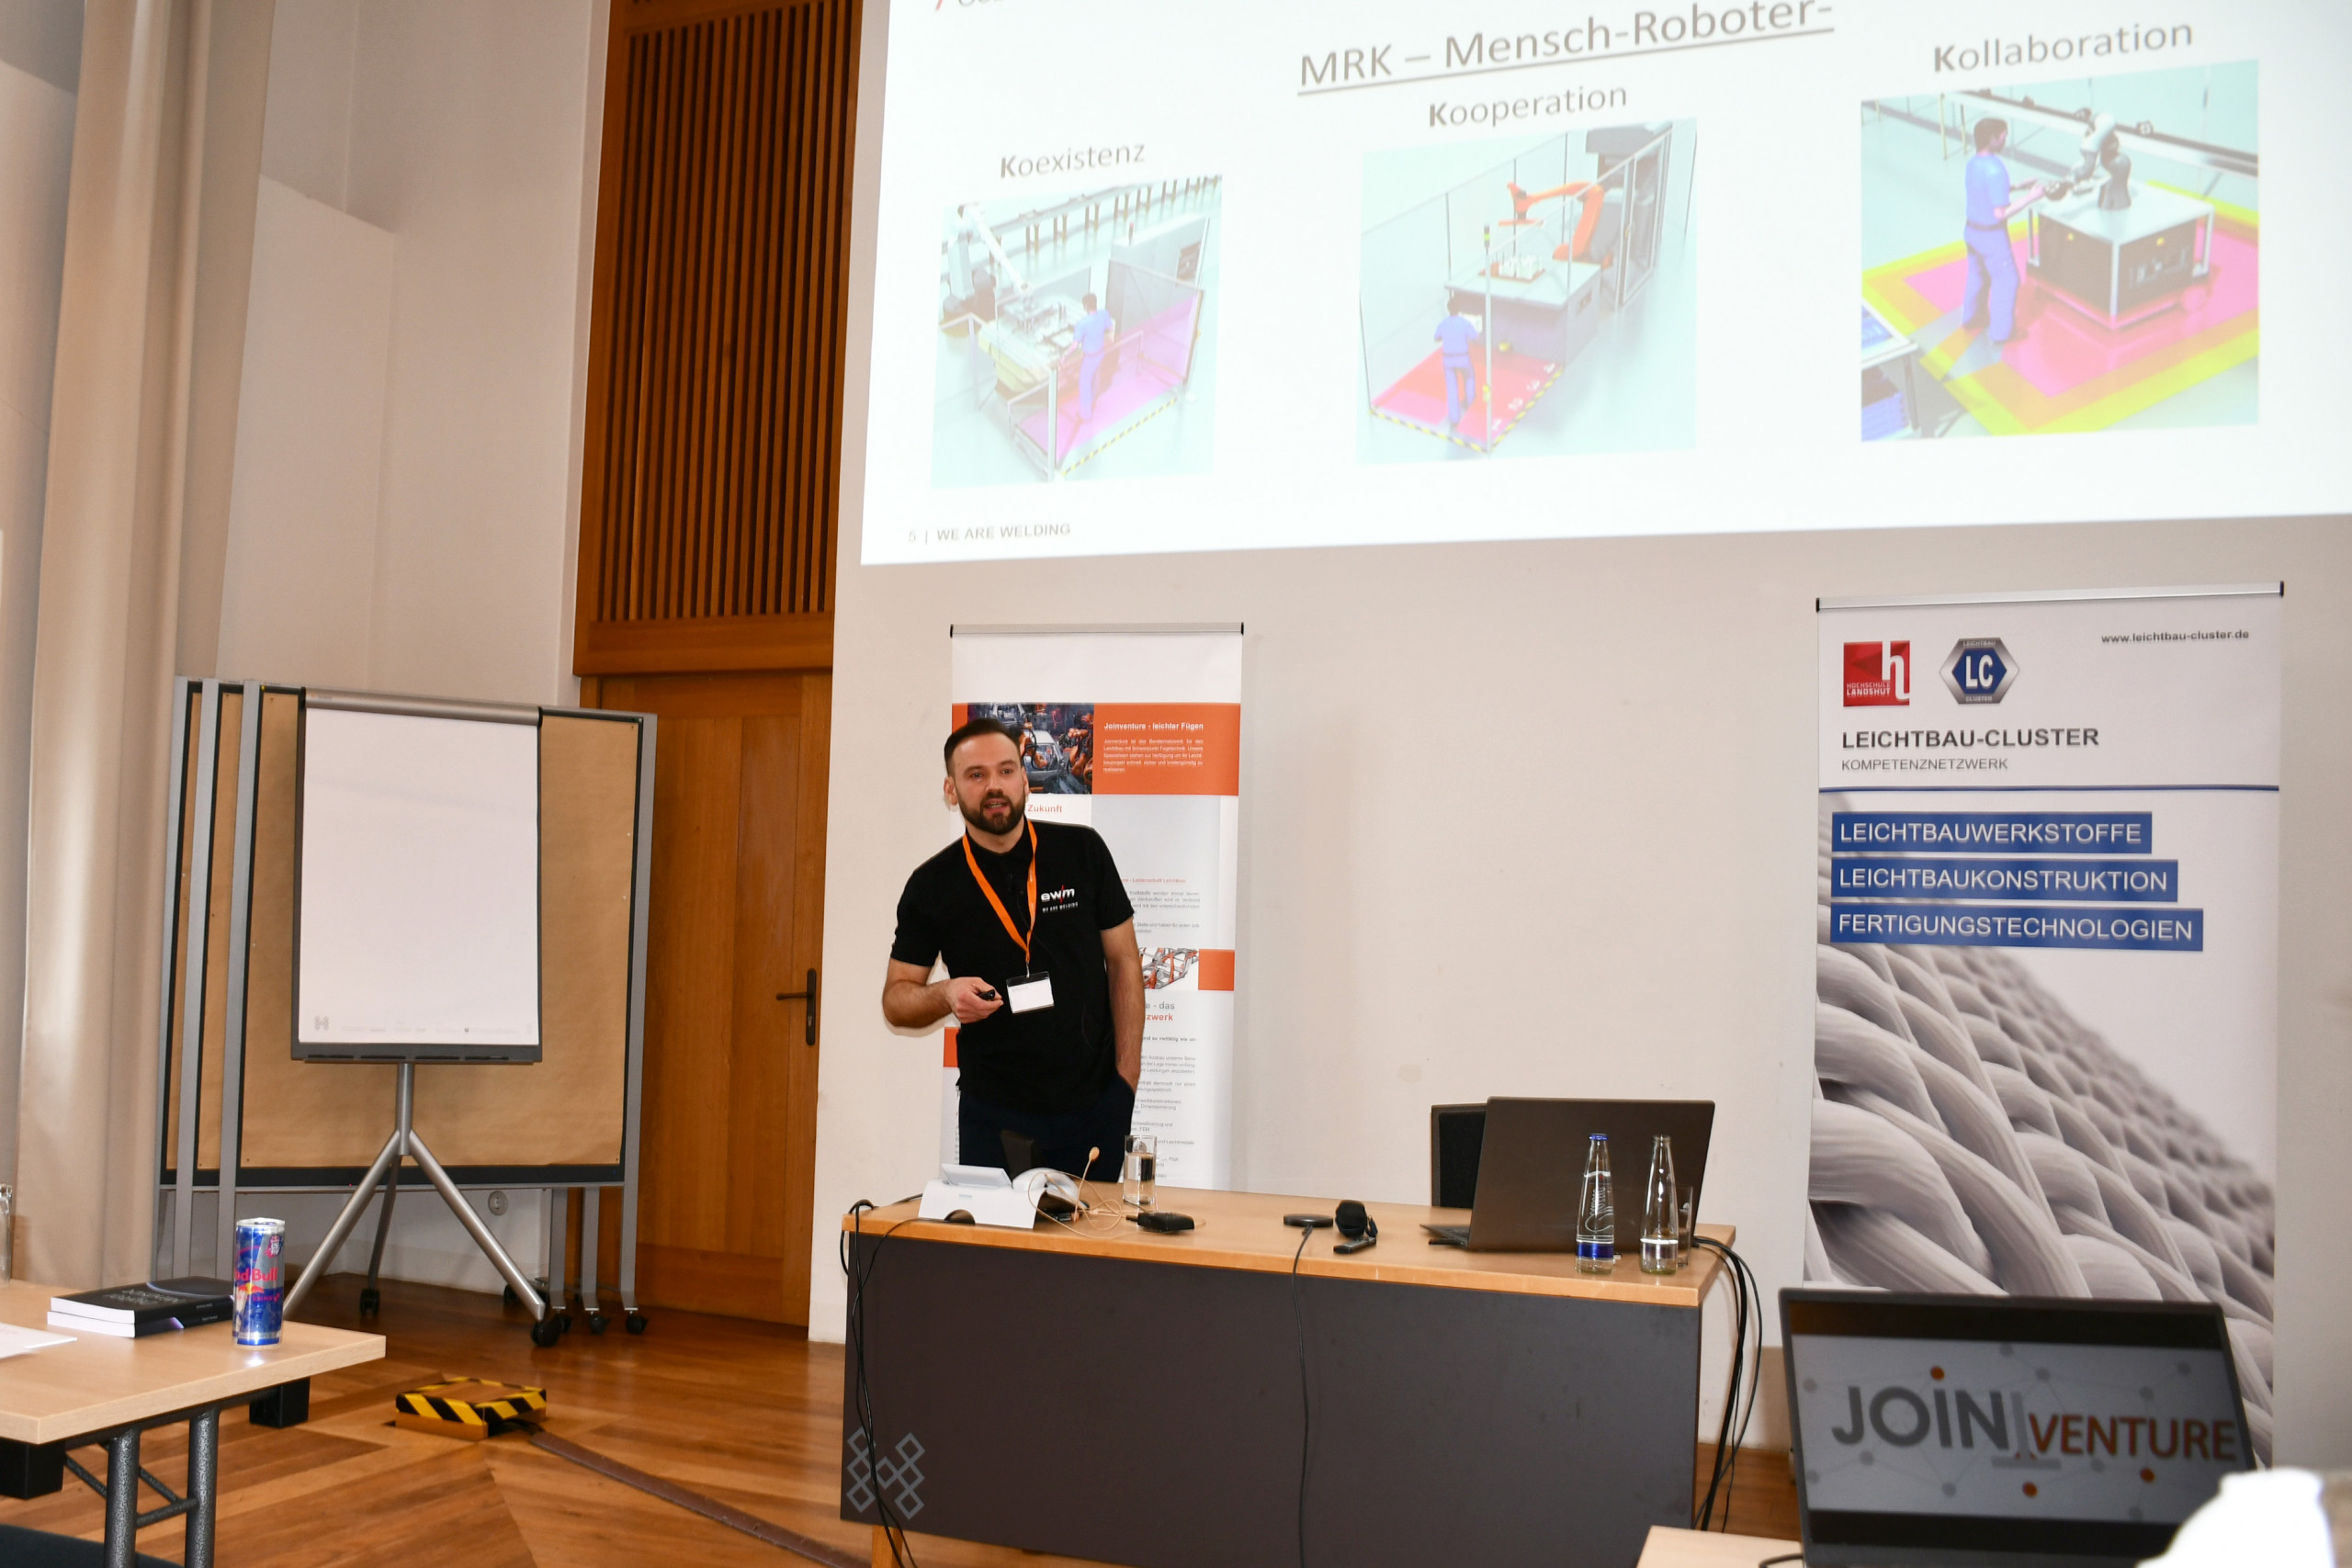 Dimitij Feller presented the current developments of cobots at EWM GmbH. Landshut University of Applied Sciences